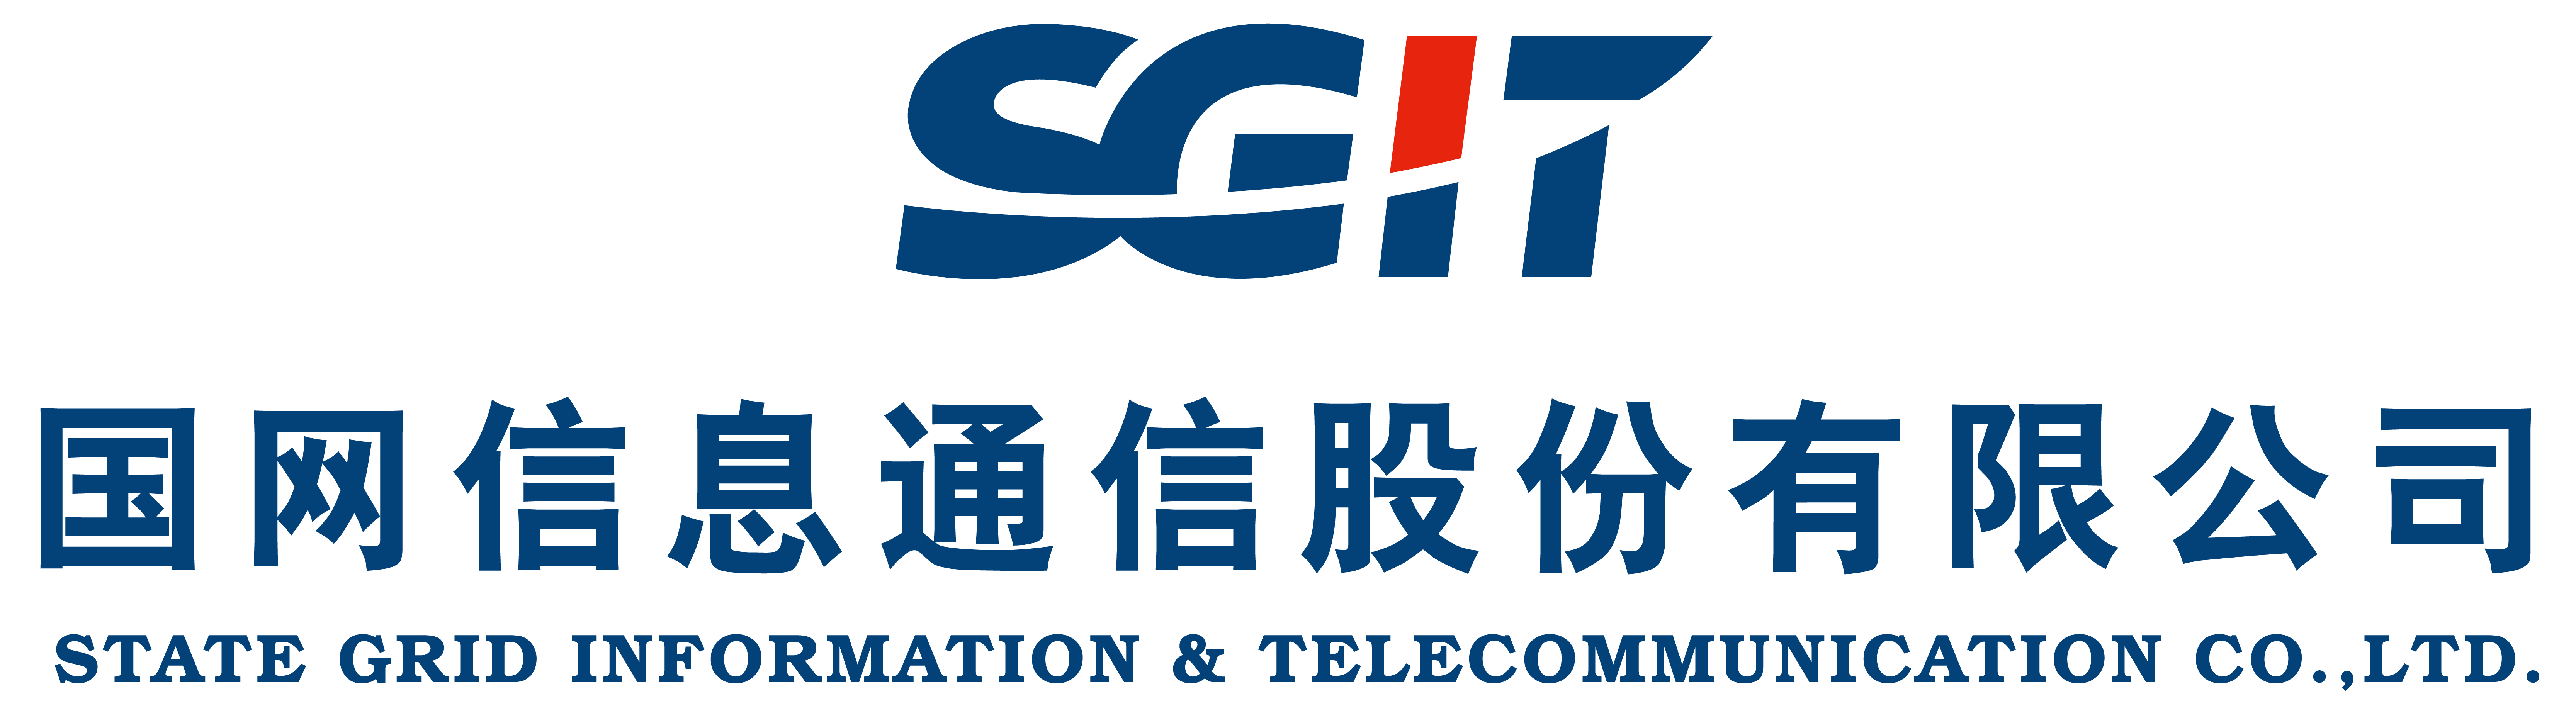 国网信通logo.png